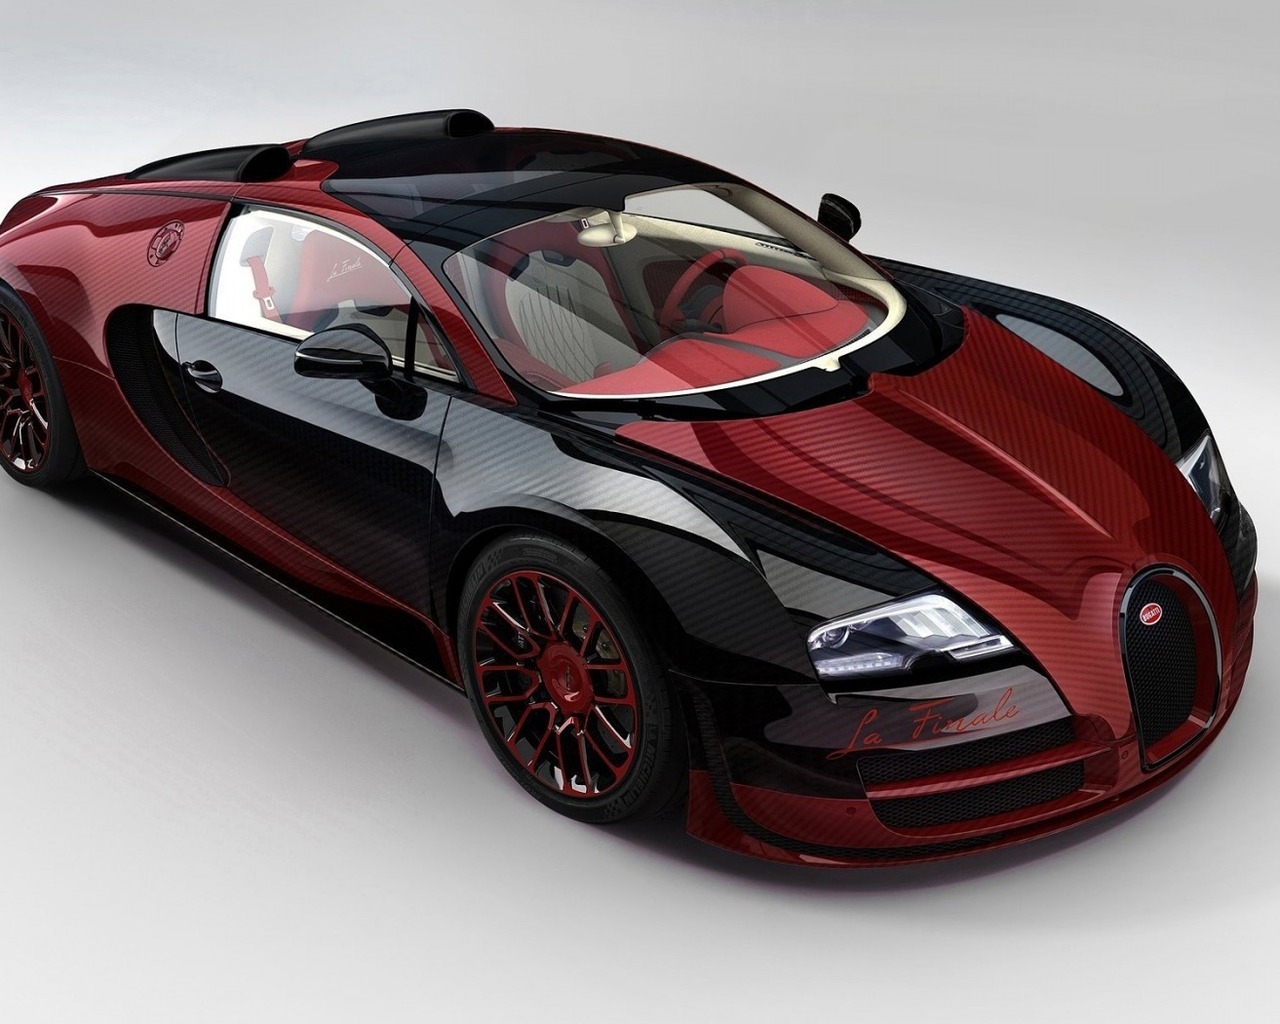 Bugatti Veyron Grand Sport Vitesse for 1280 x 1024 resolution